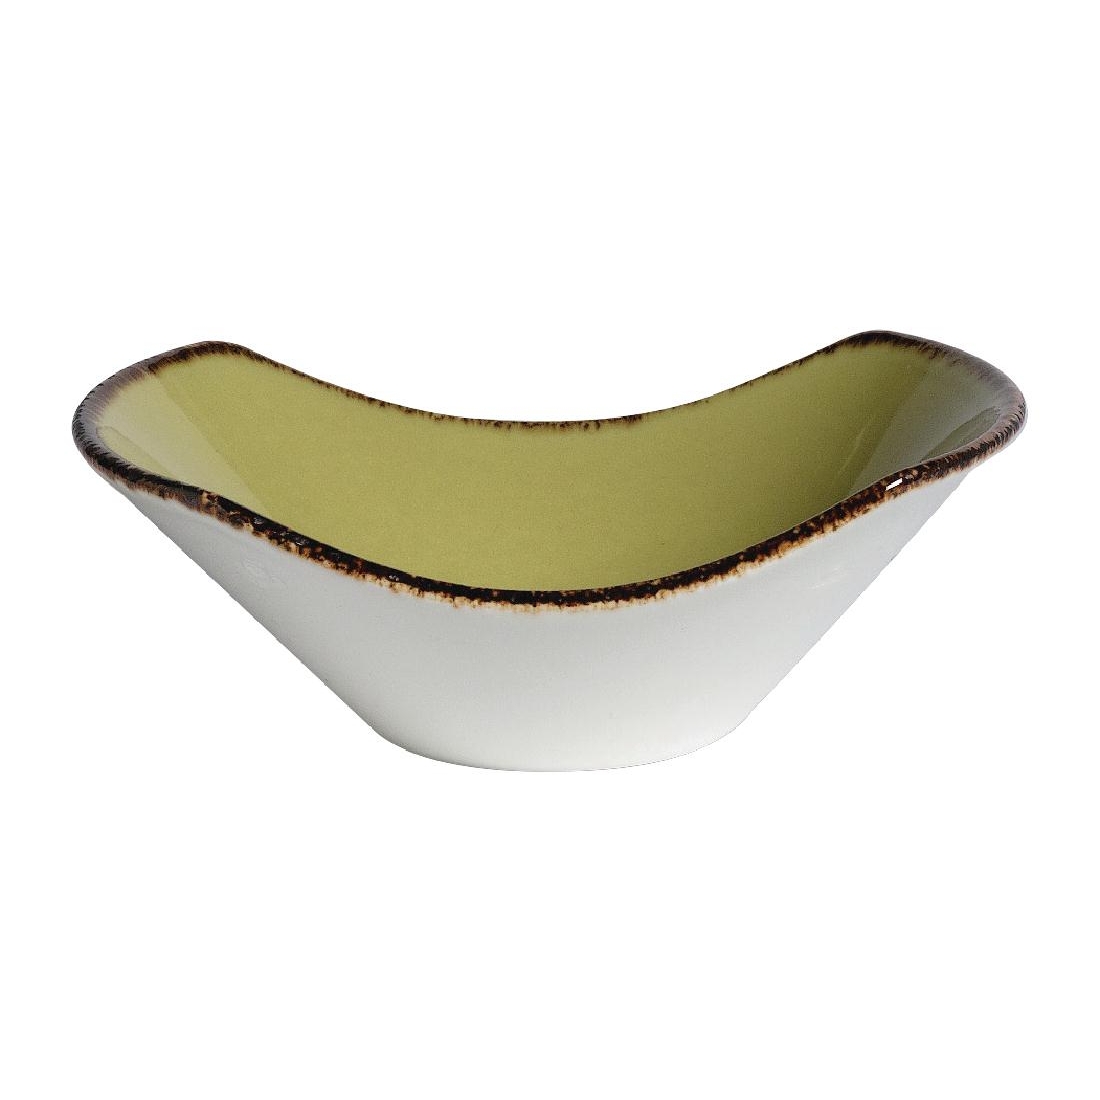 Steelite Terramesa Olive Scoop Bowls 165mm